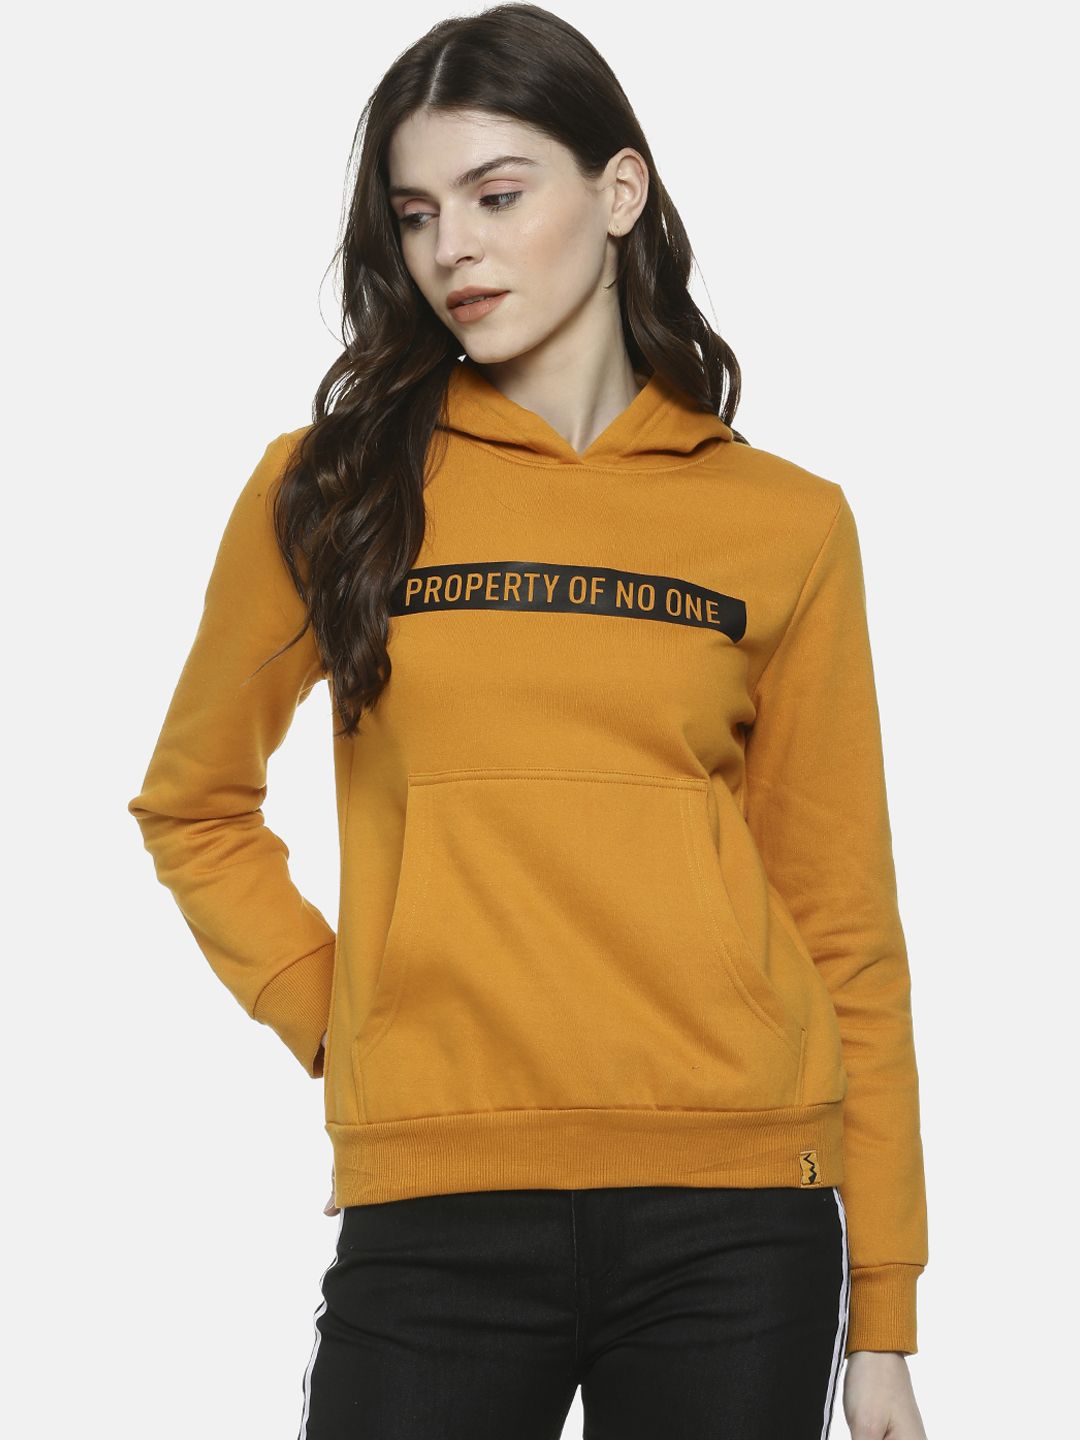 Campus Sutra Women Mustard Yellow Printed Hooded Sweatshirt Price in India